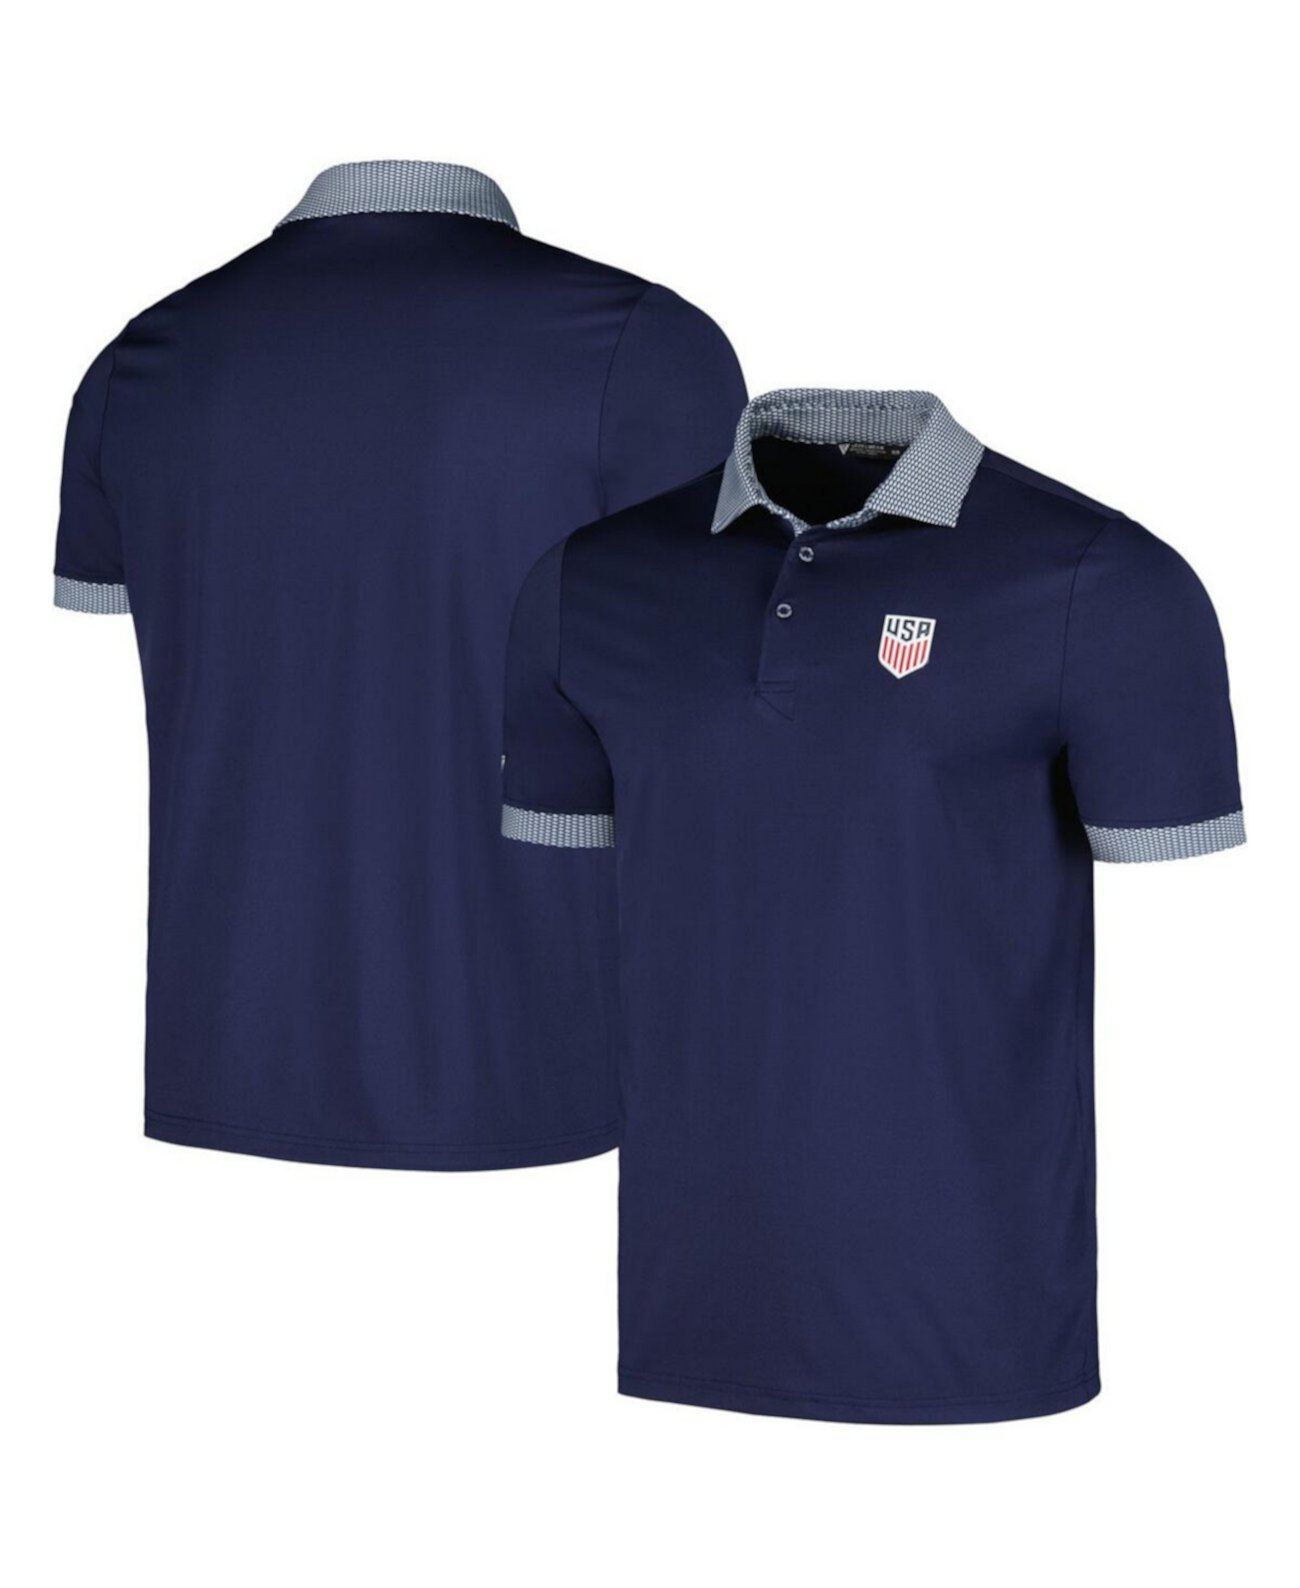 Men's Navy USMNT Thomas Performance Polo Shirt LevelWear